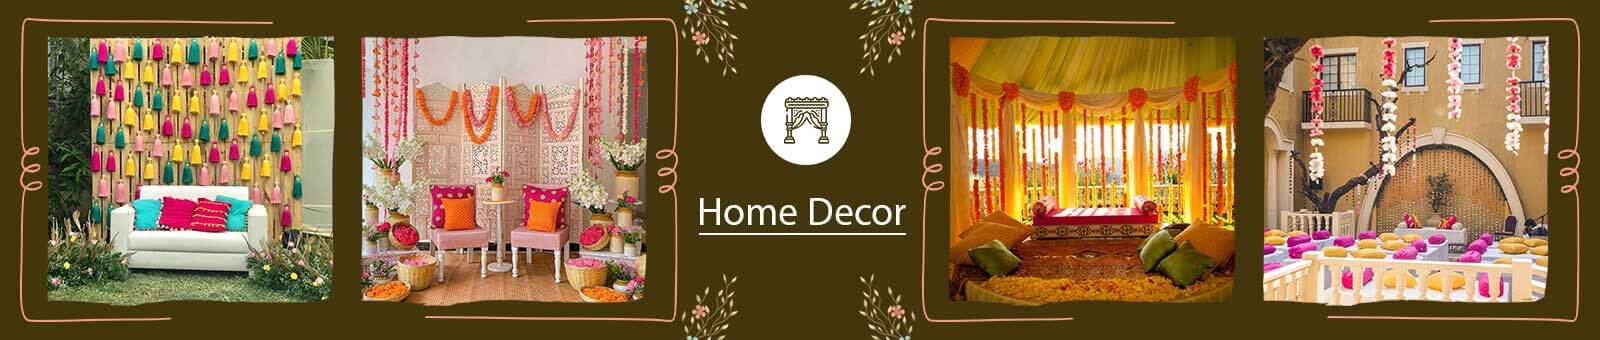 Best Home Decor Services in Delhi